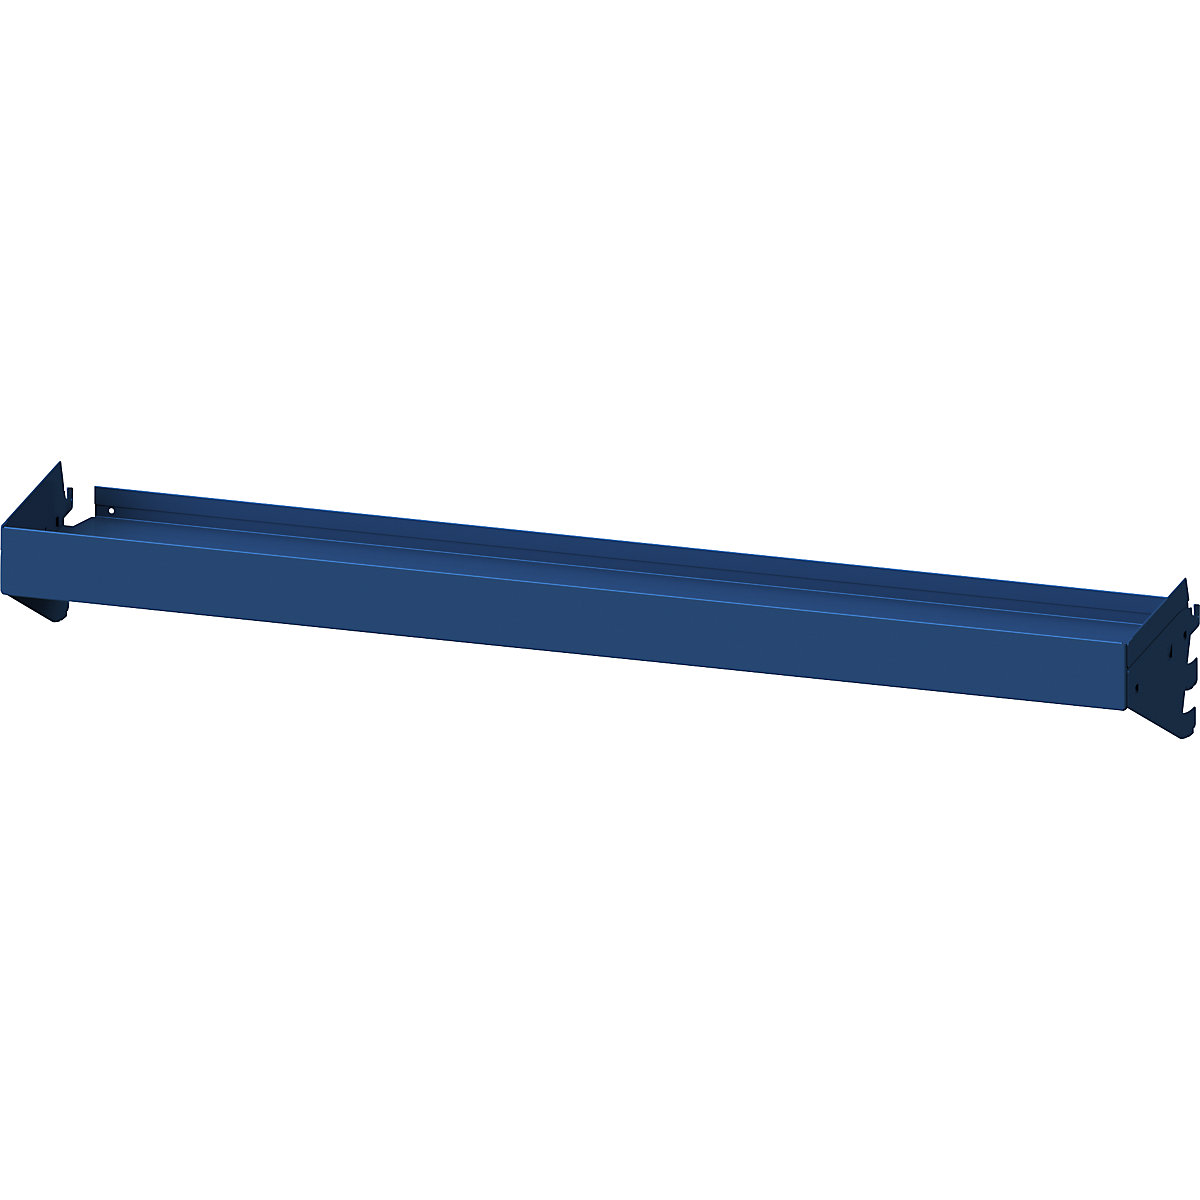 Tray shelf – ANKE, 75 mm raised edges, WxD 1250 x 250 mm, blue-5